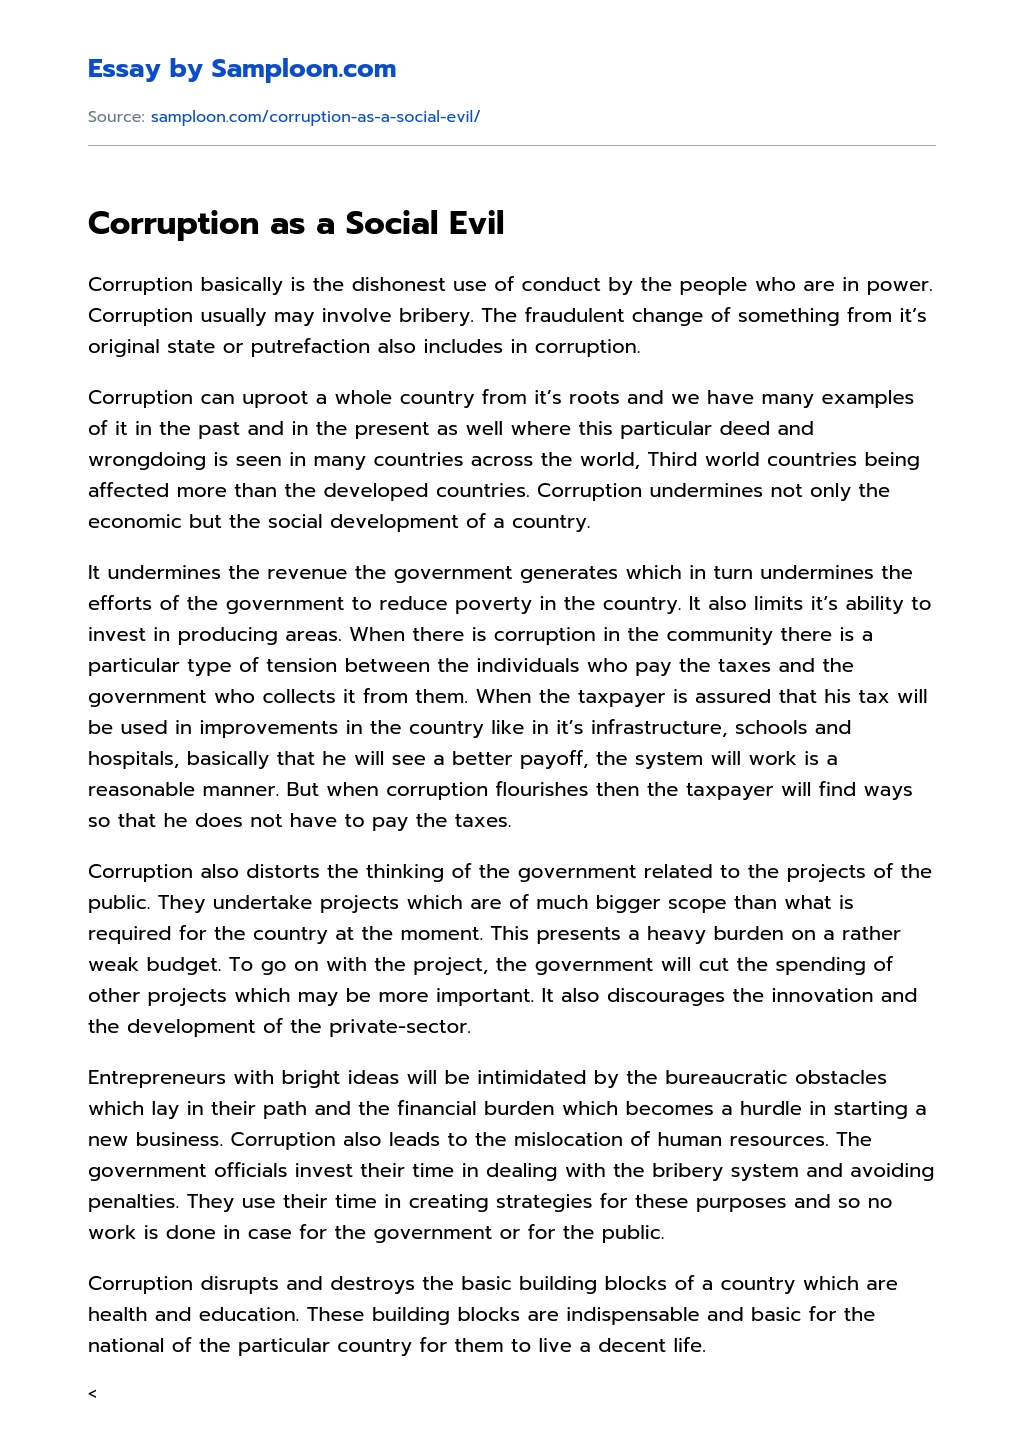 Corruption as a Social Evil essay